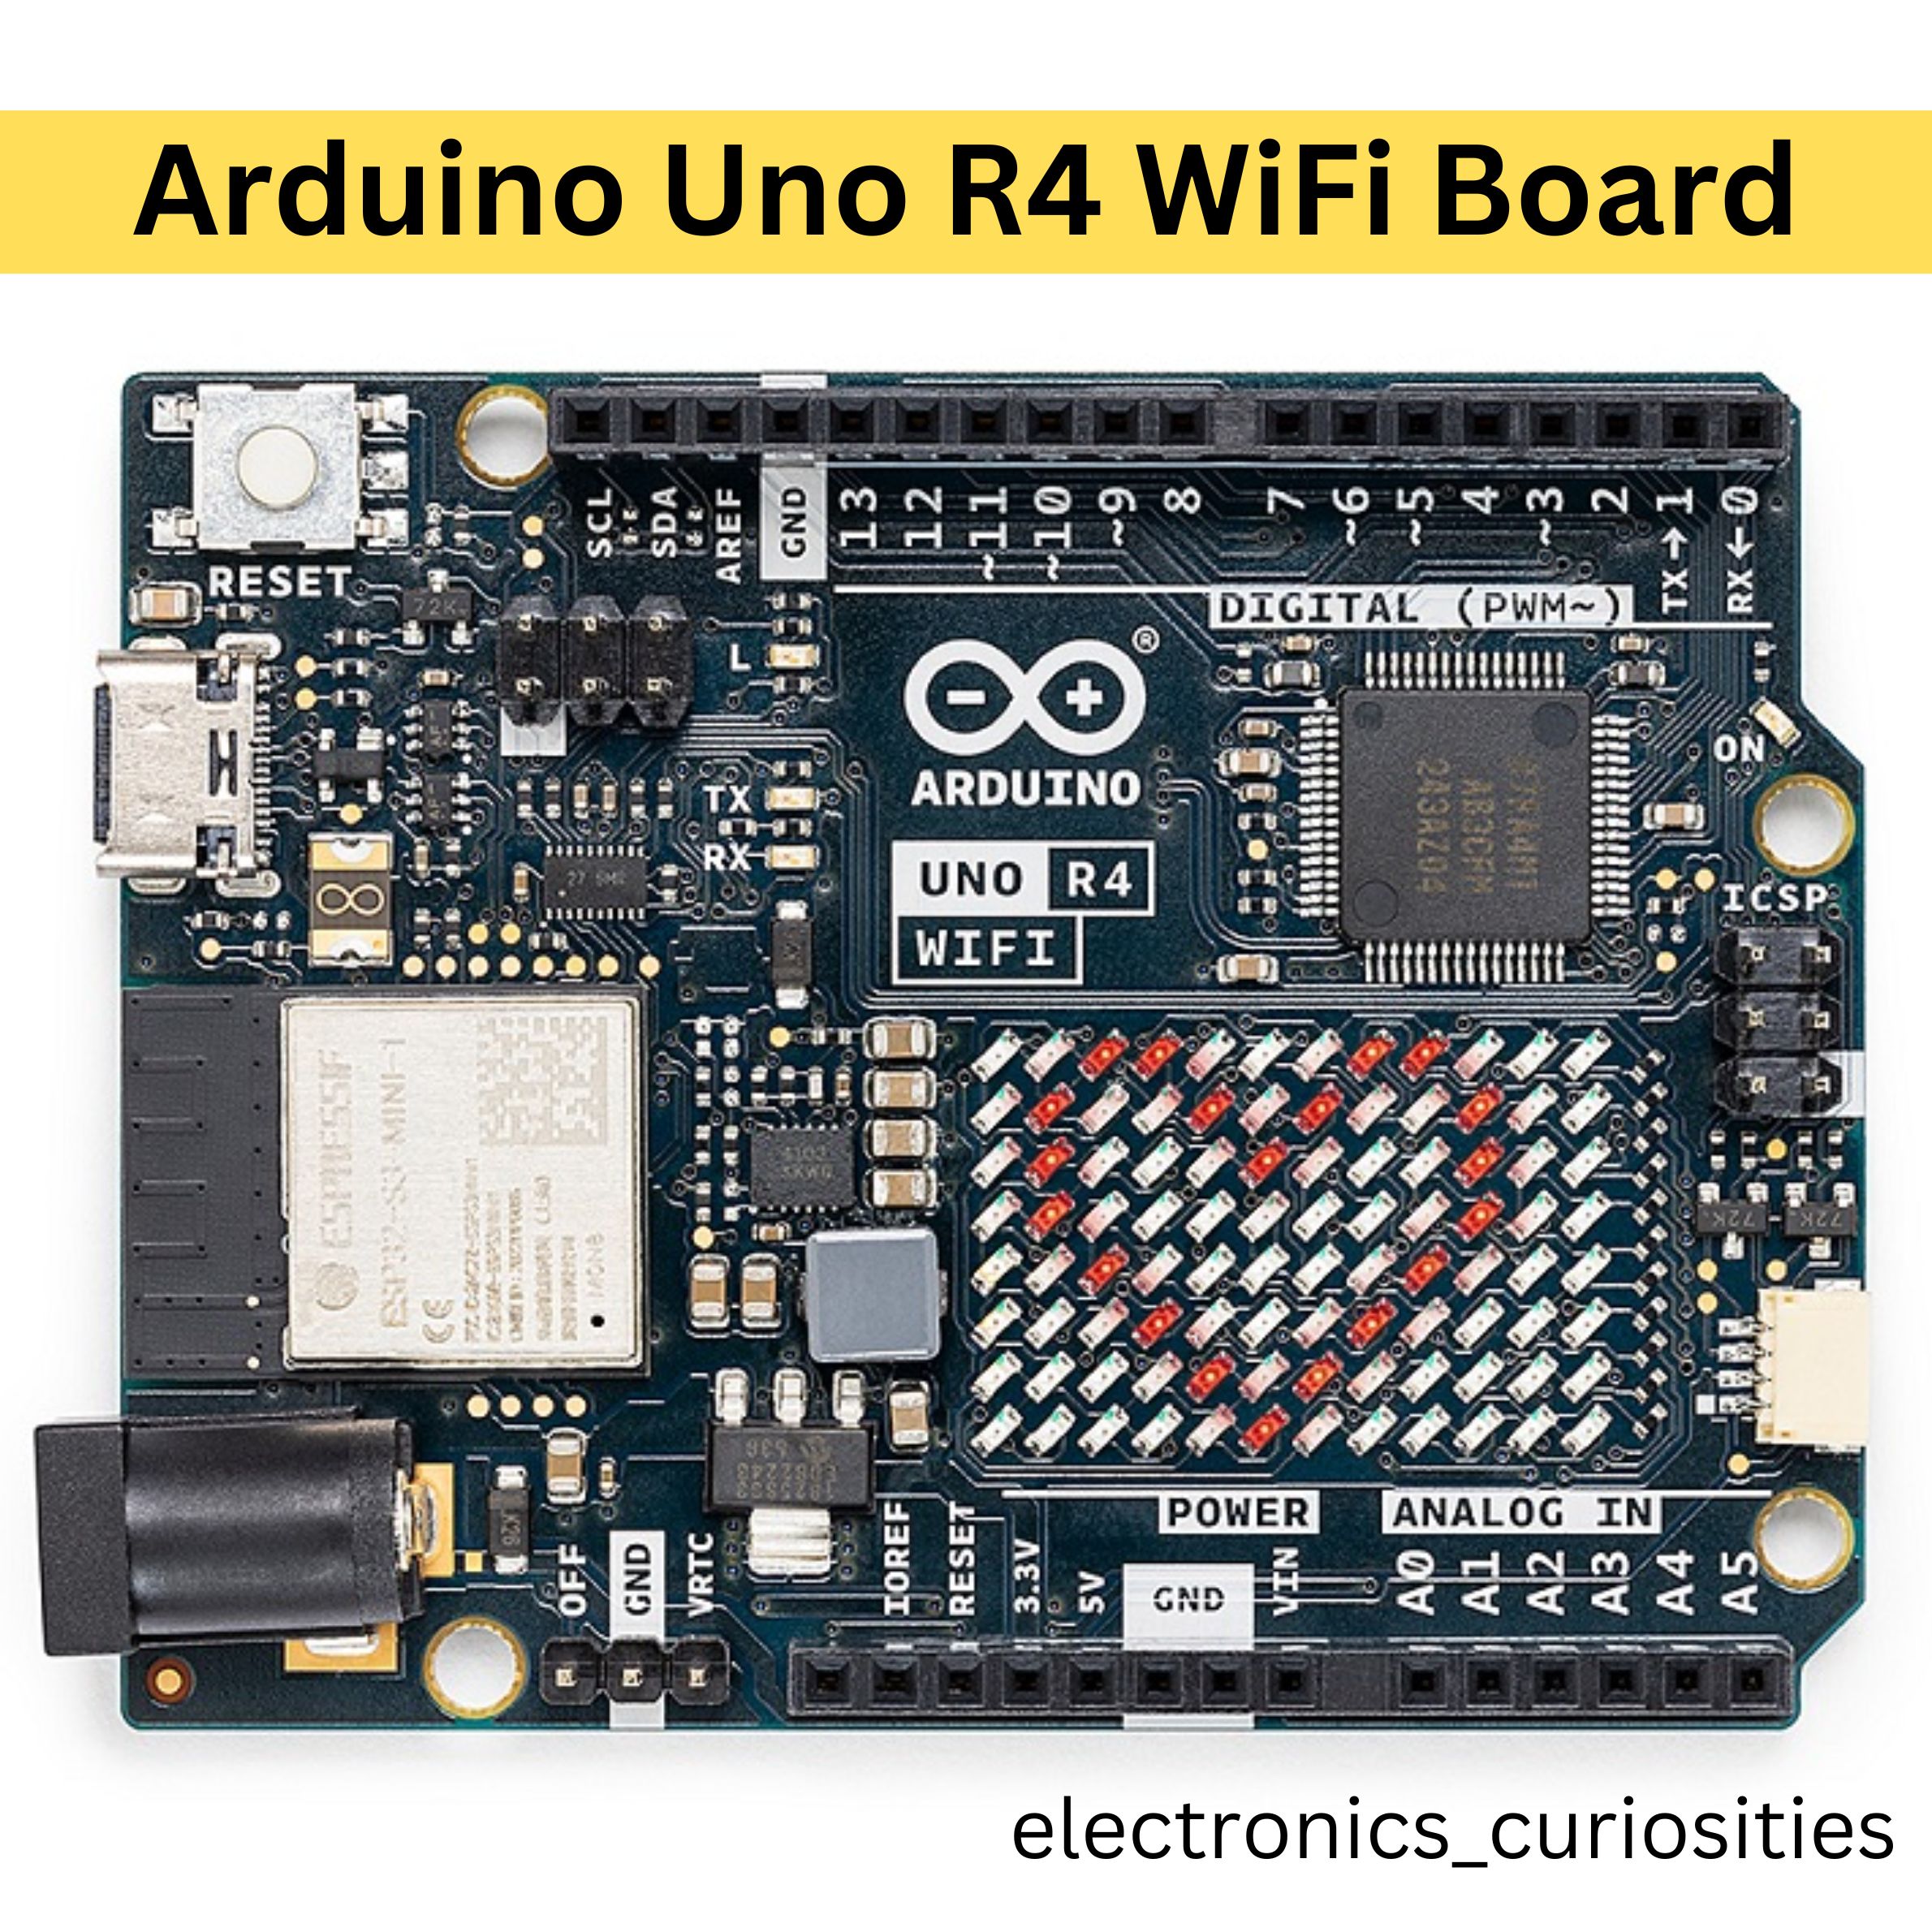 Arduino Uno R3 Development Board (Without Cable) - Clone Compatiable